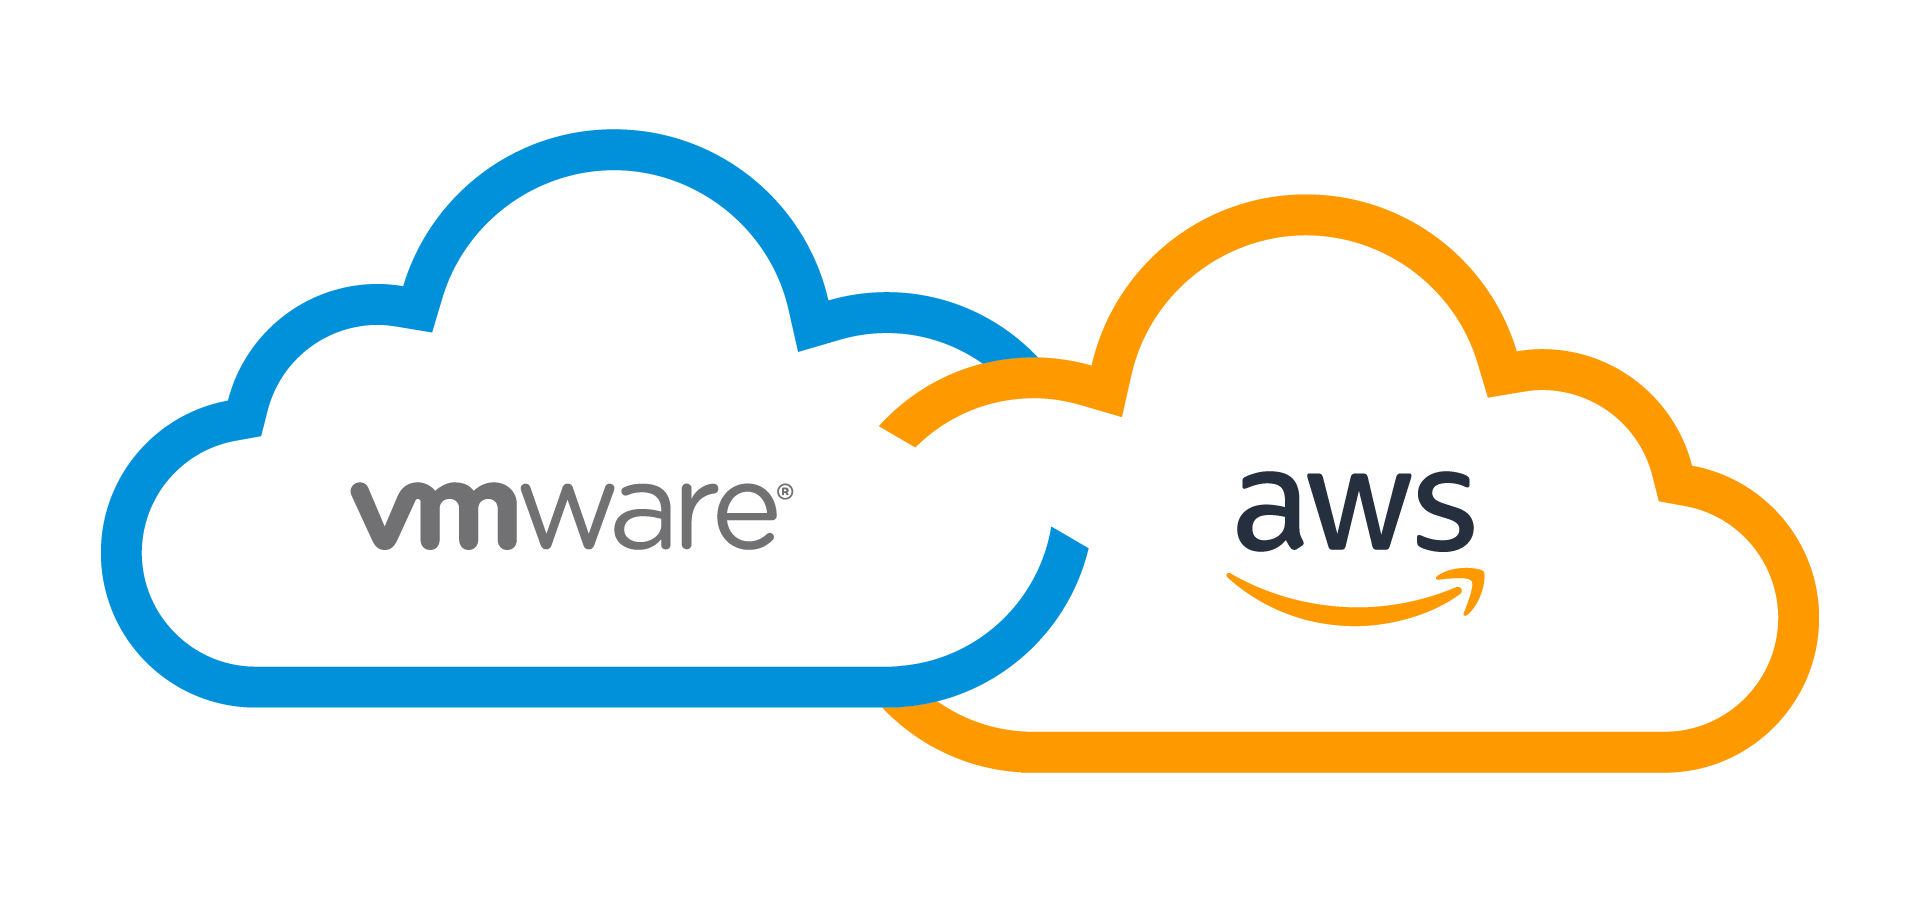 Introdução ao VMware Cloud on AWS - Blog VMware Brasil